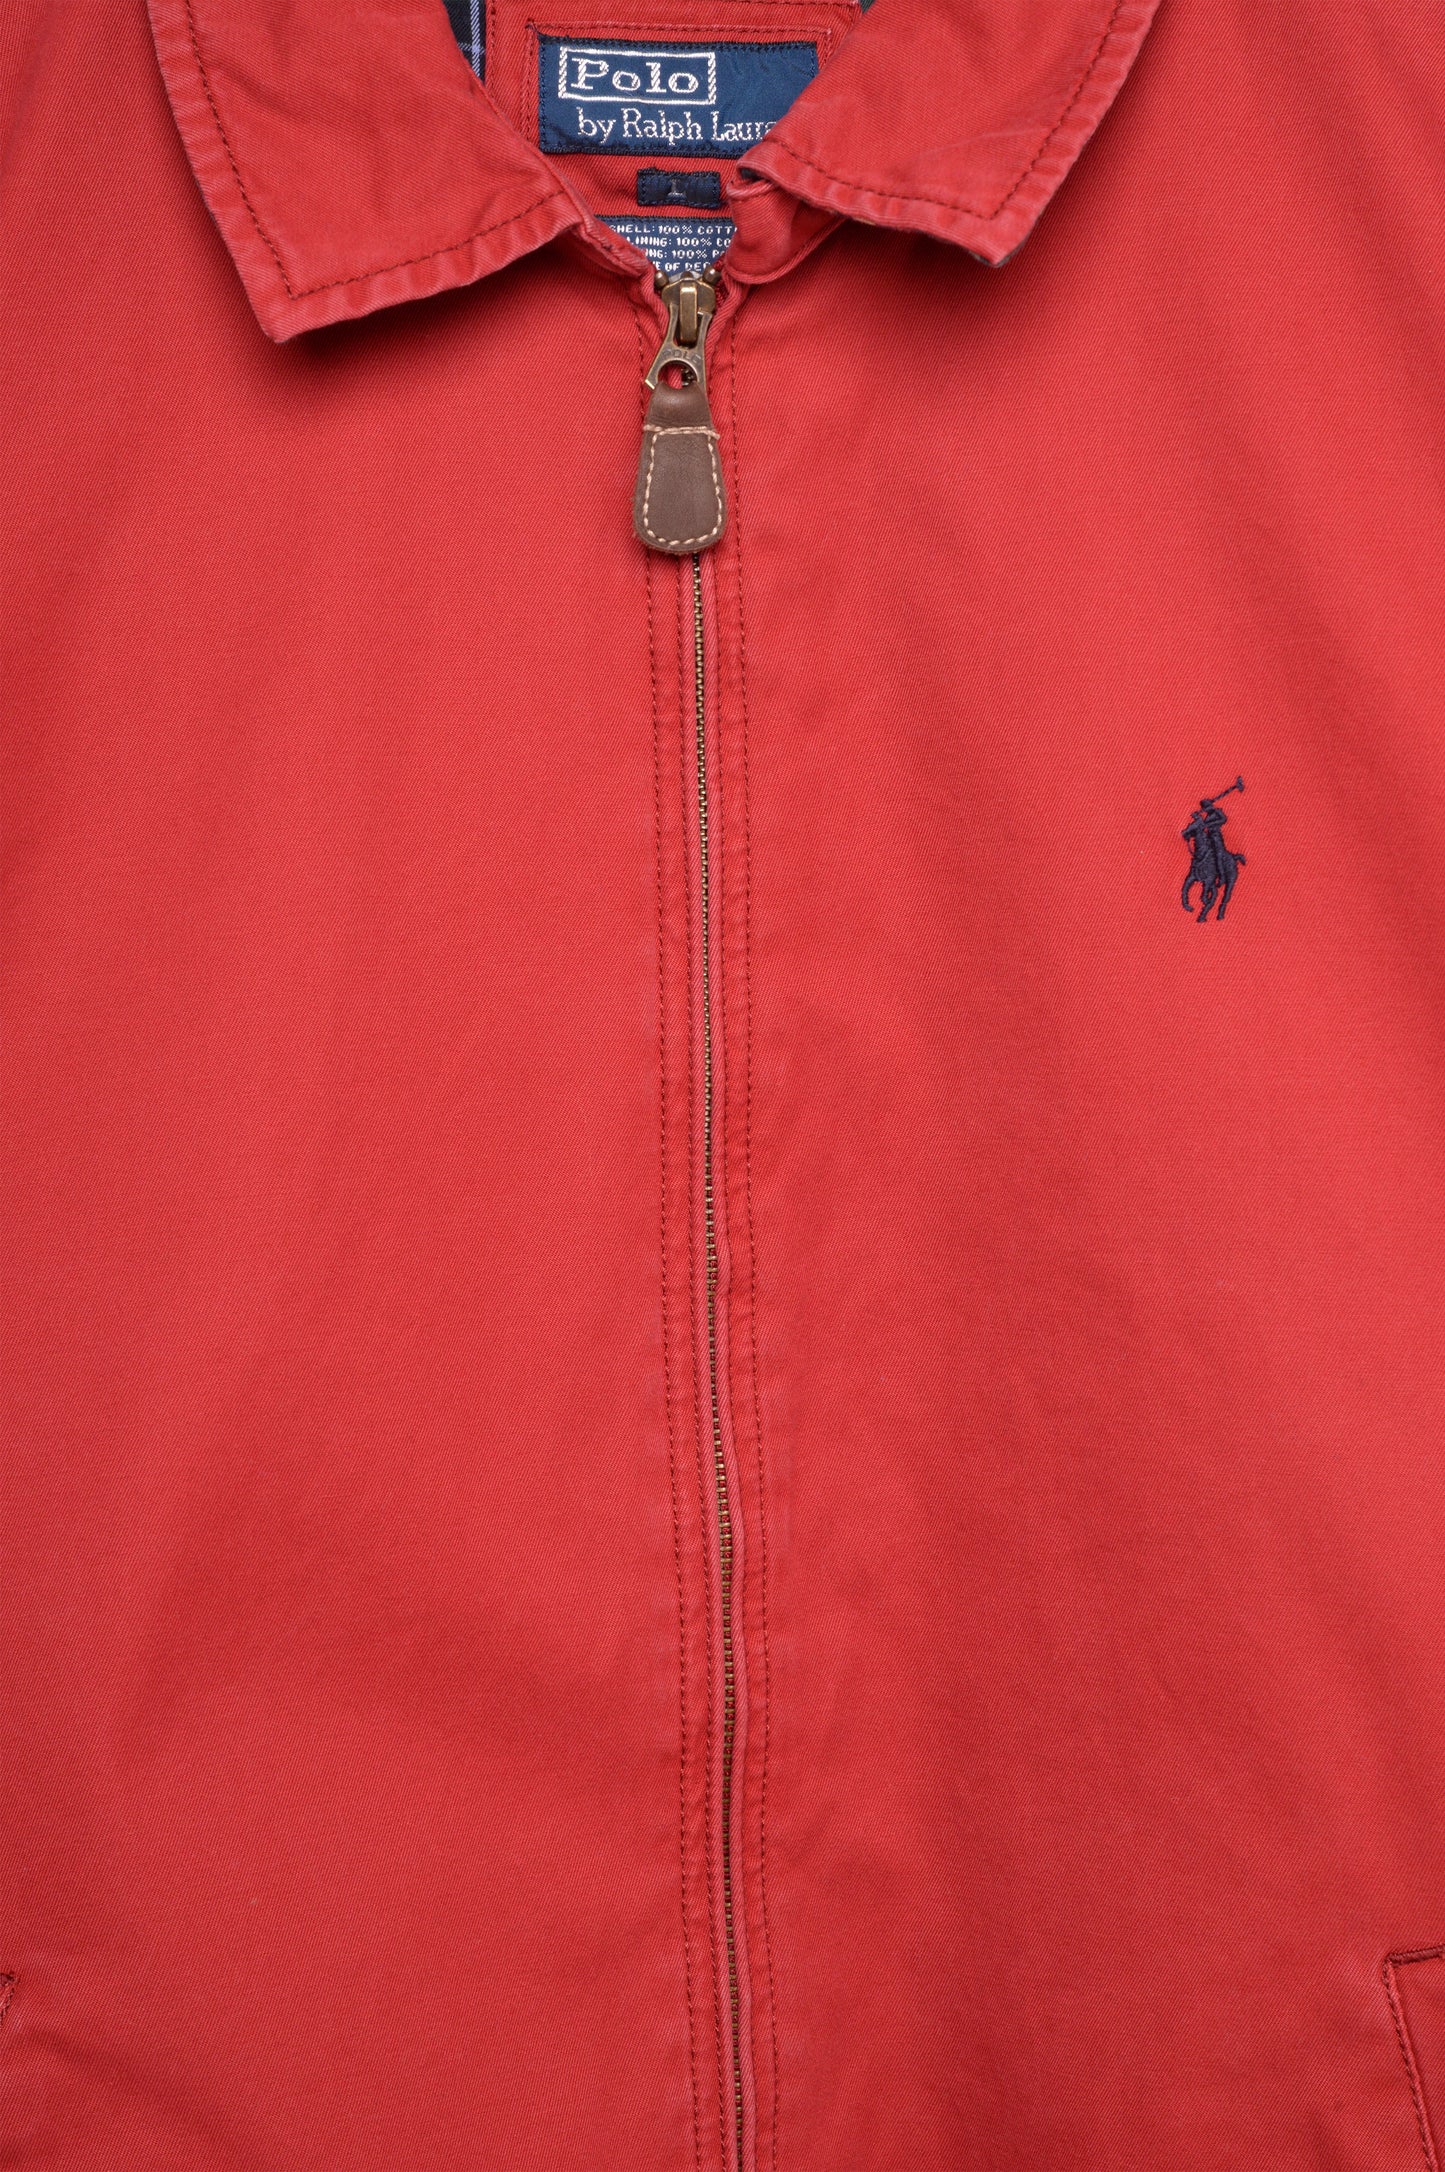 Ralph Lauren Golf Jacket